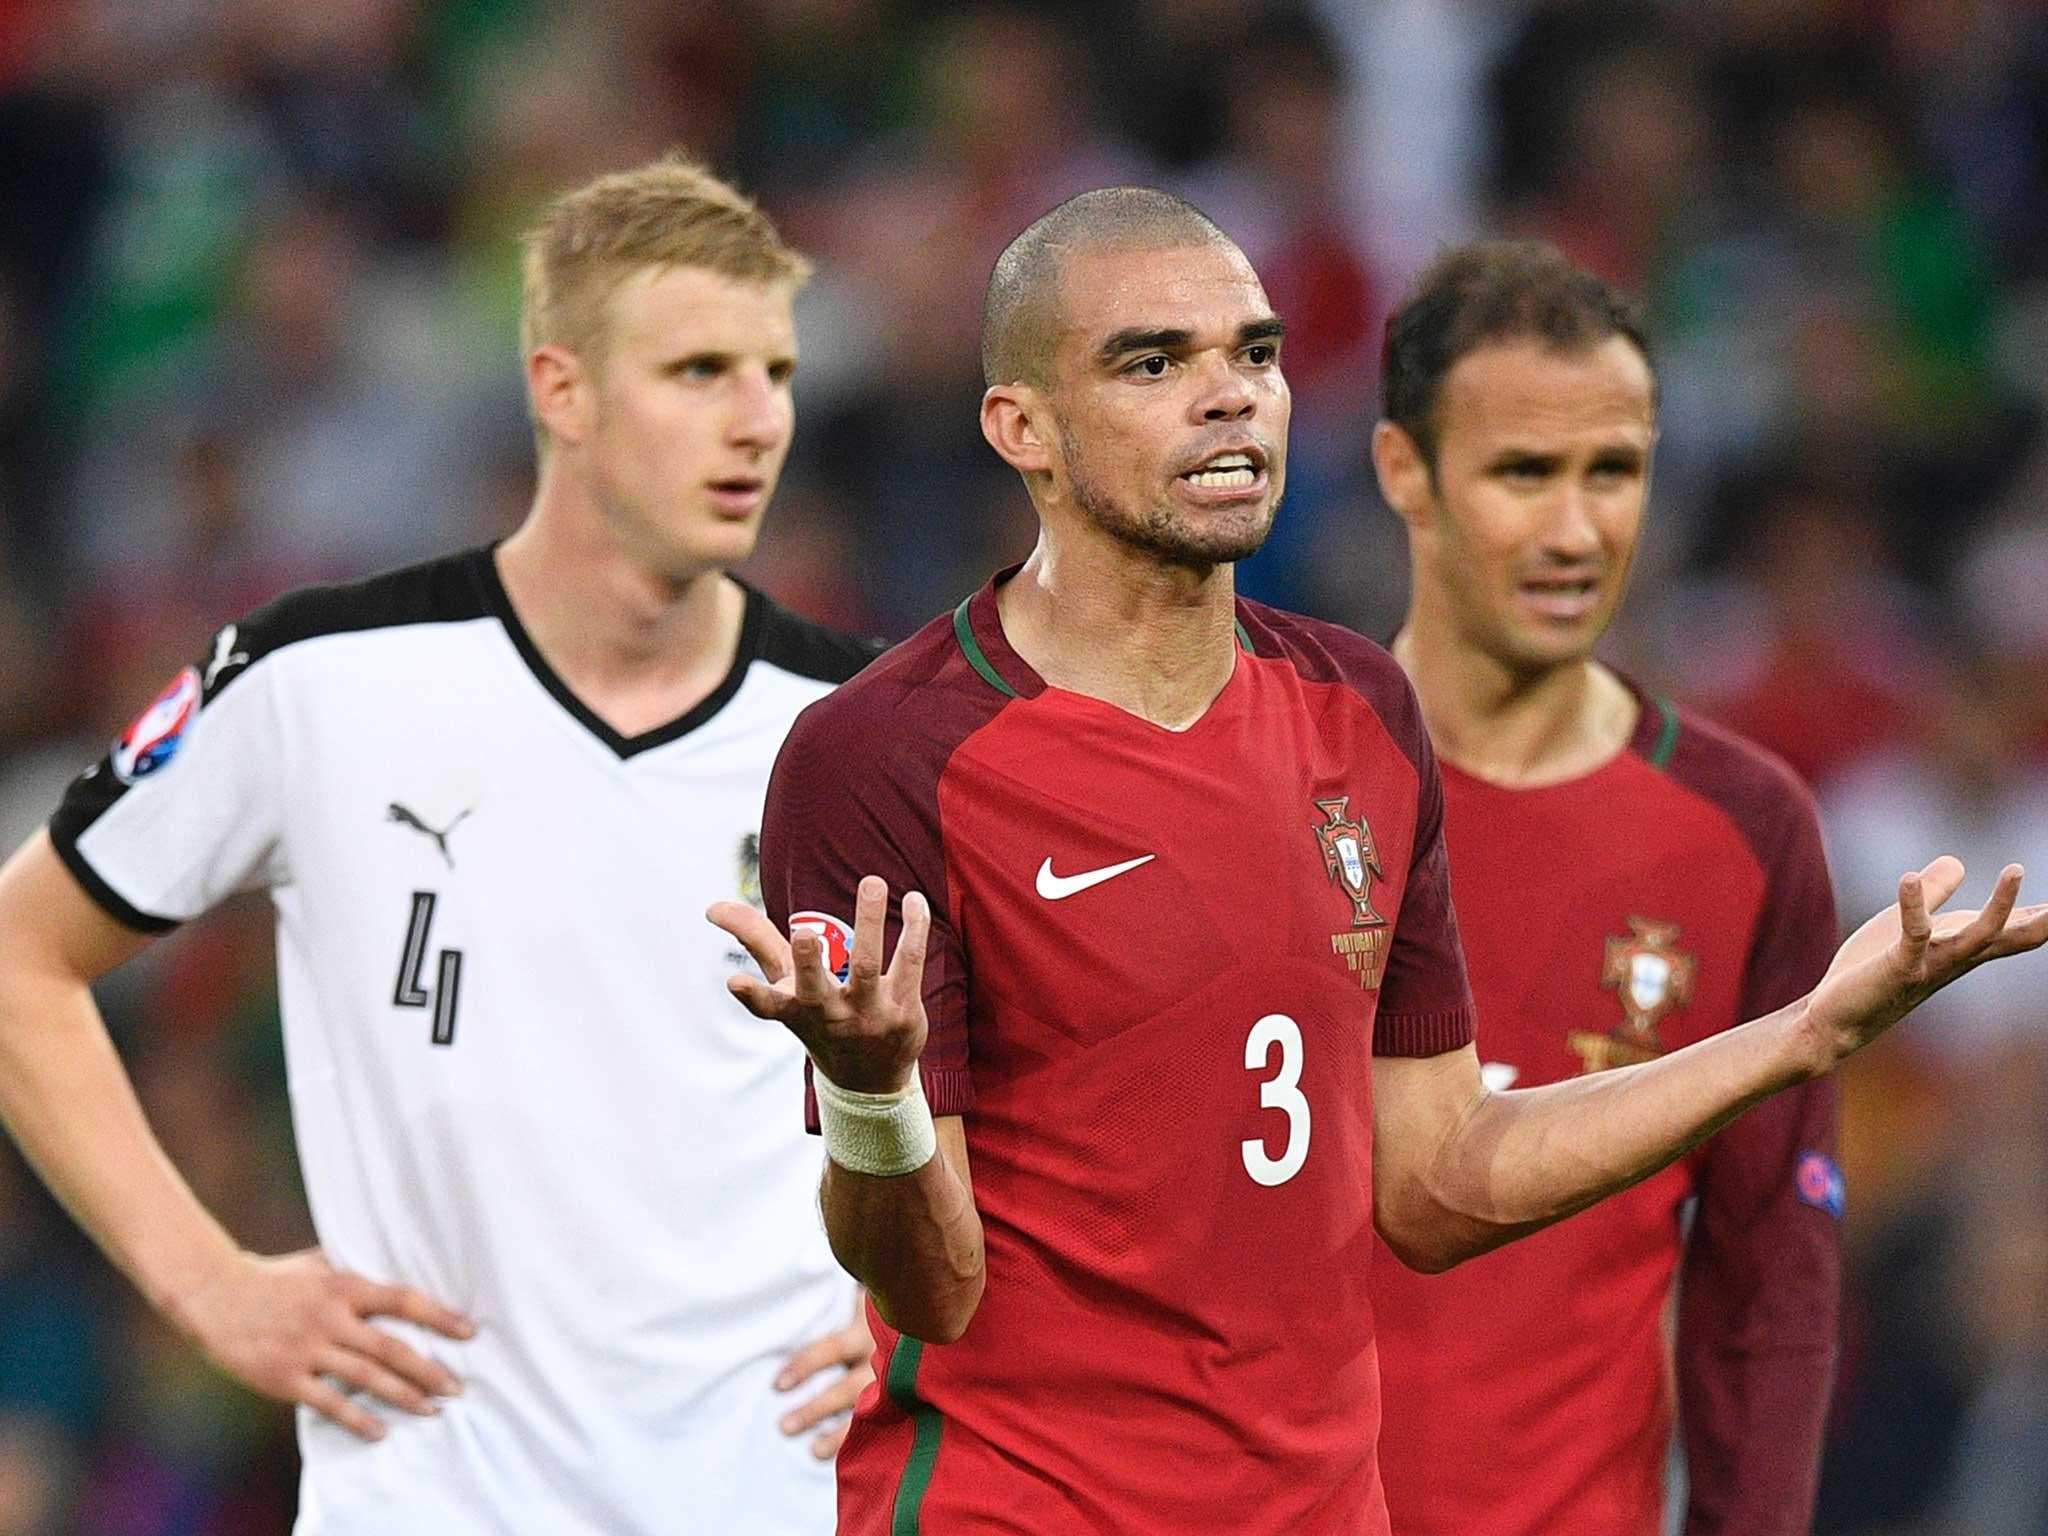 &#13;
Portugal defender Pepe shows his frustration &#13;